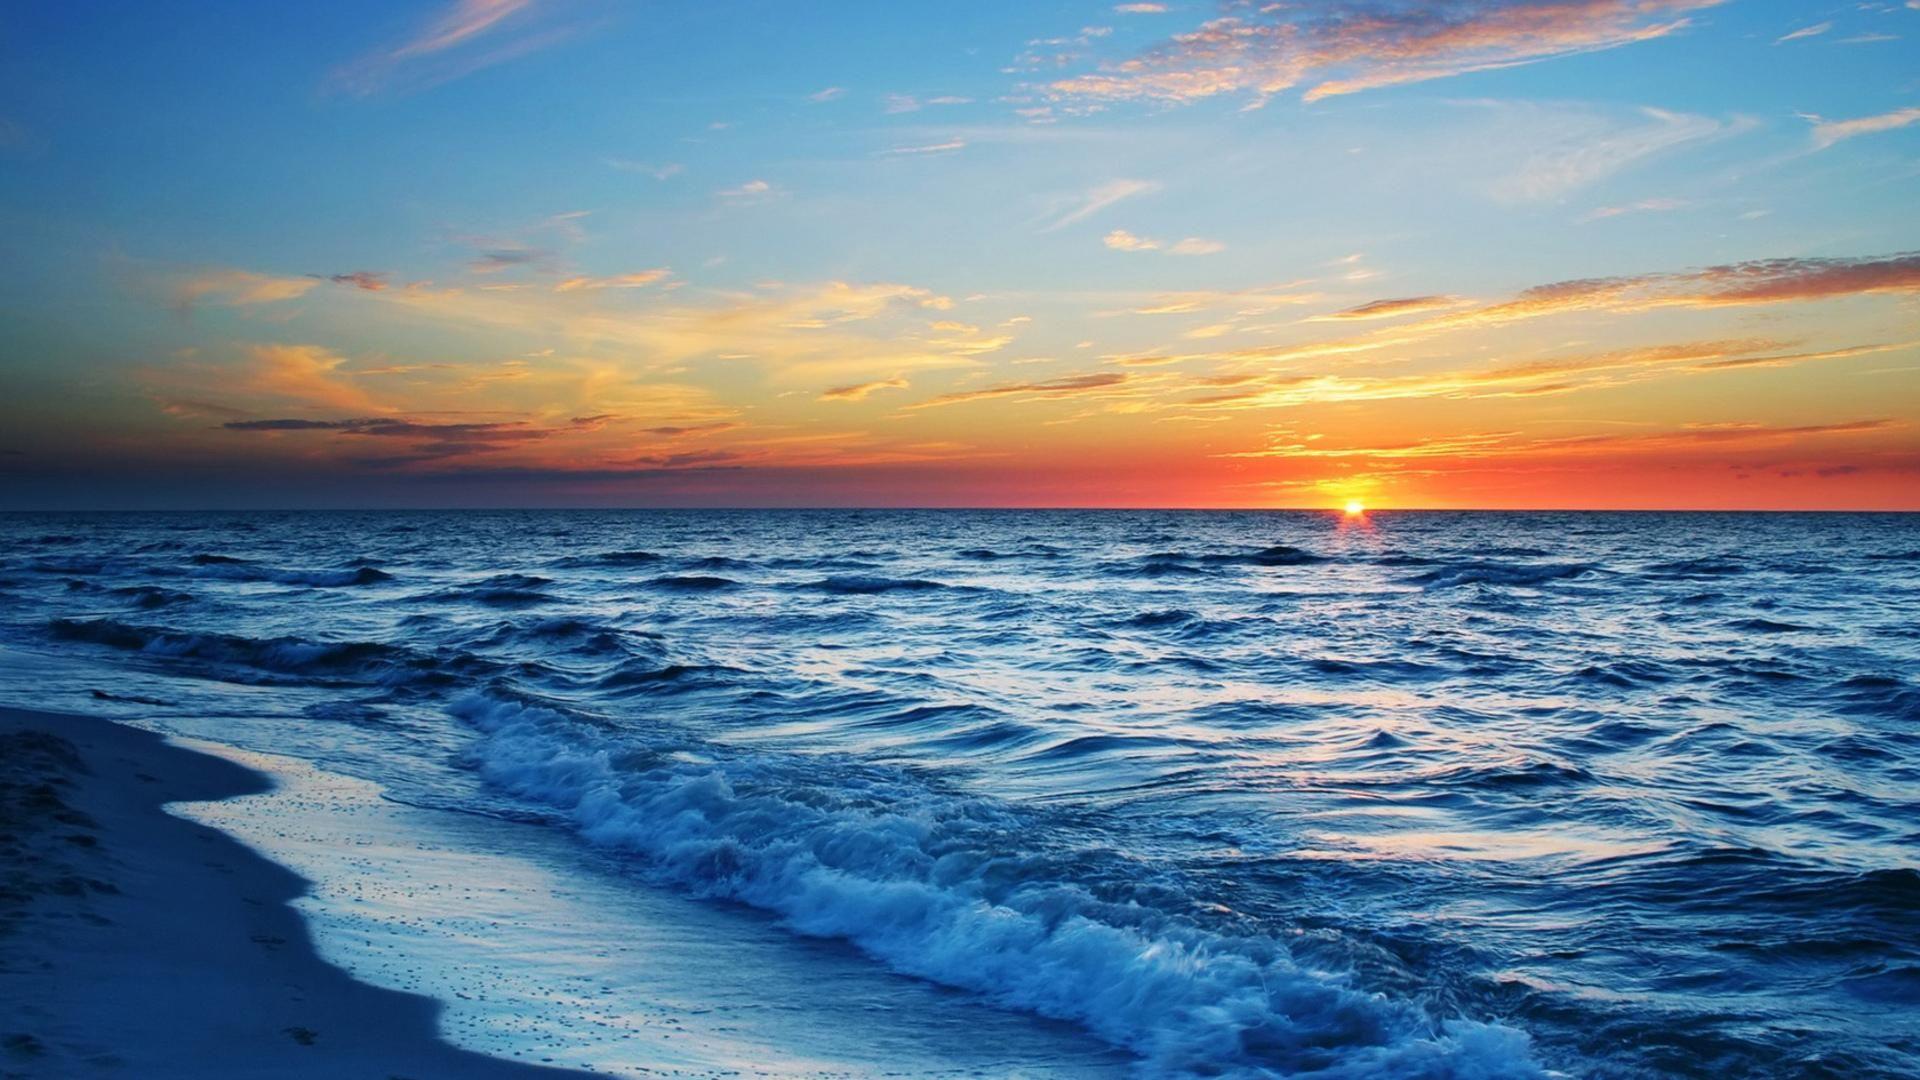 ocean sunset picture image, Ocean